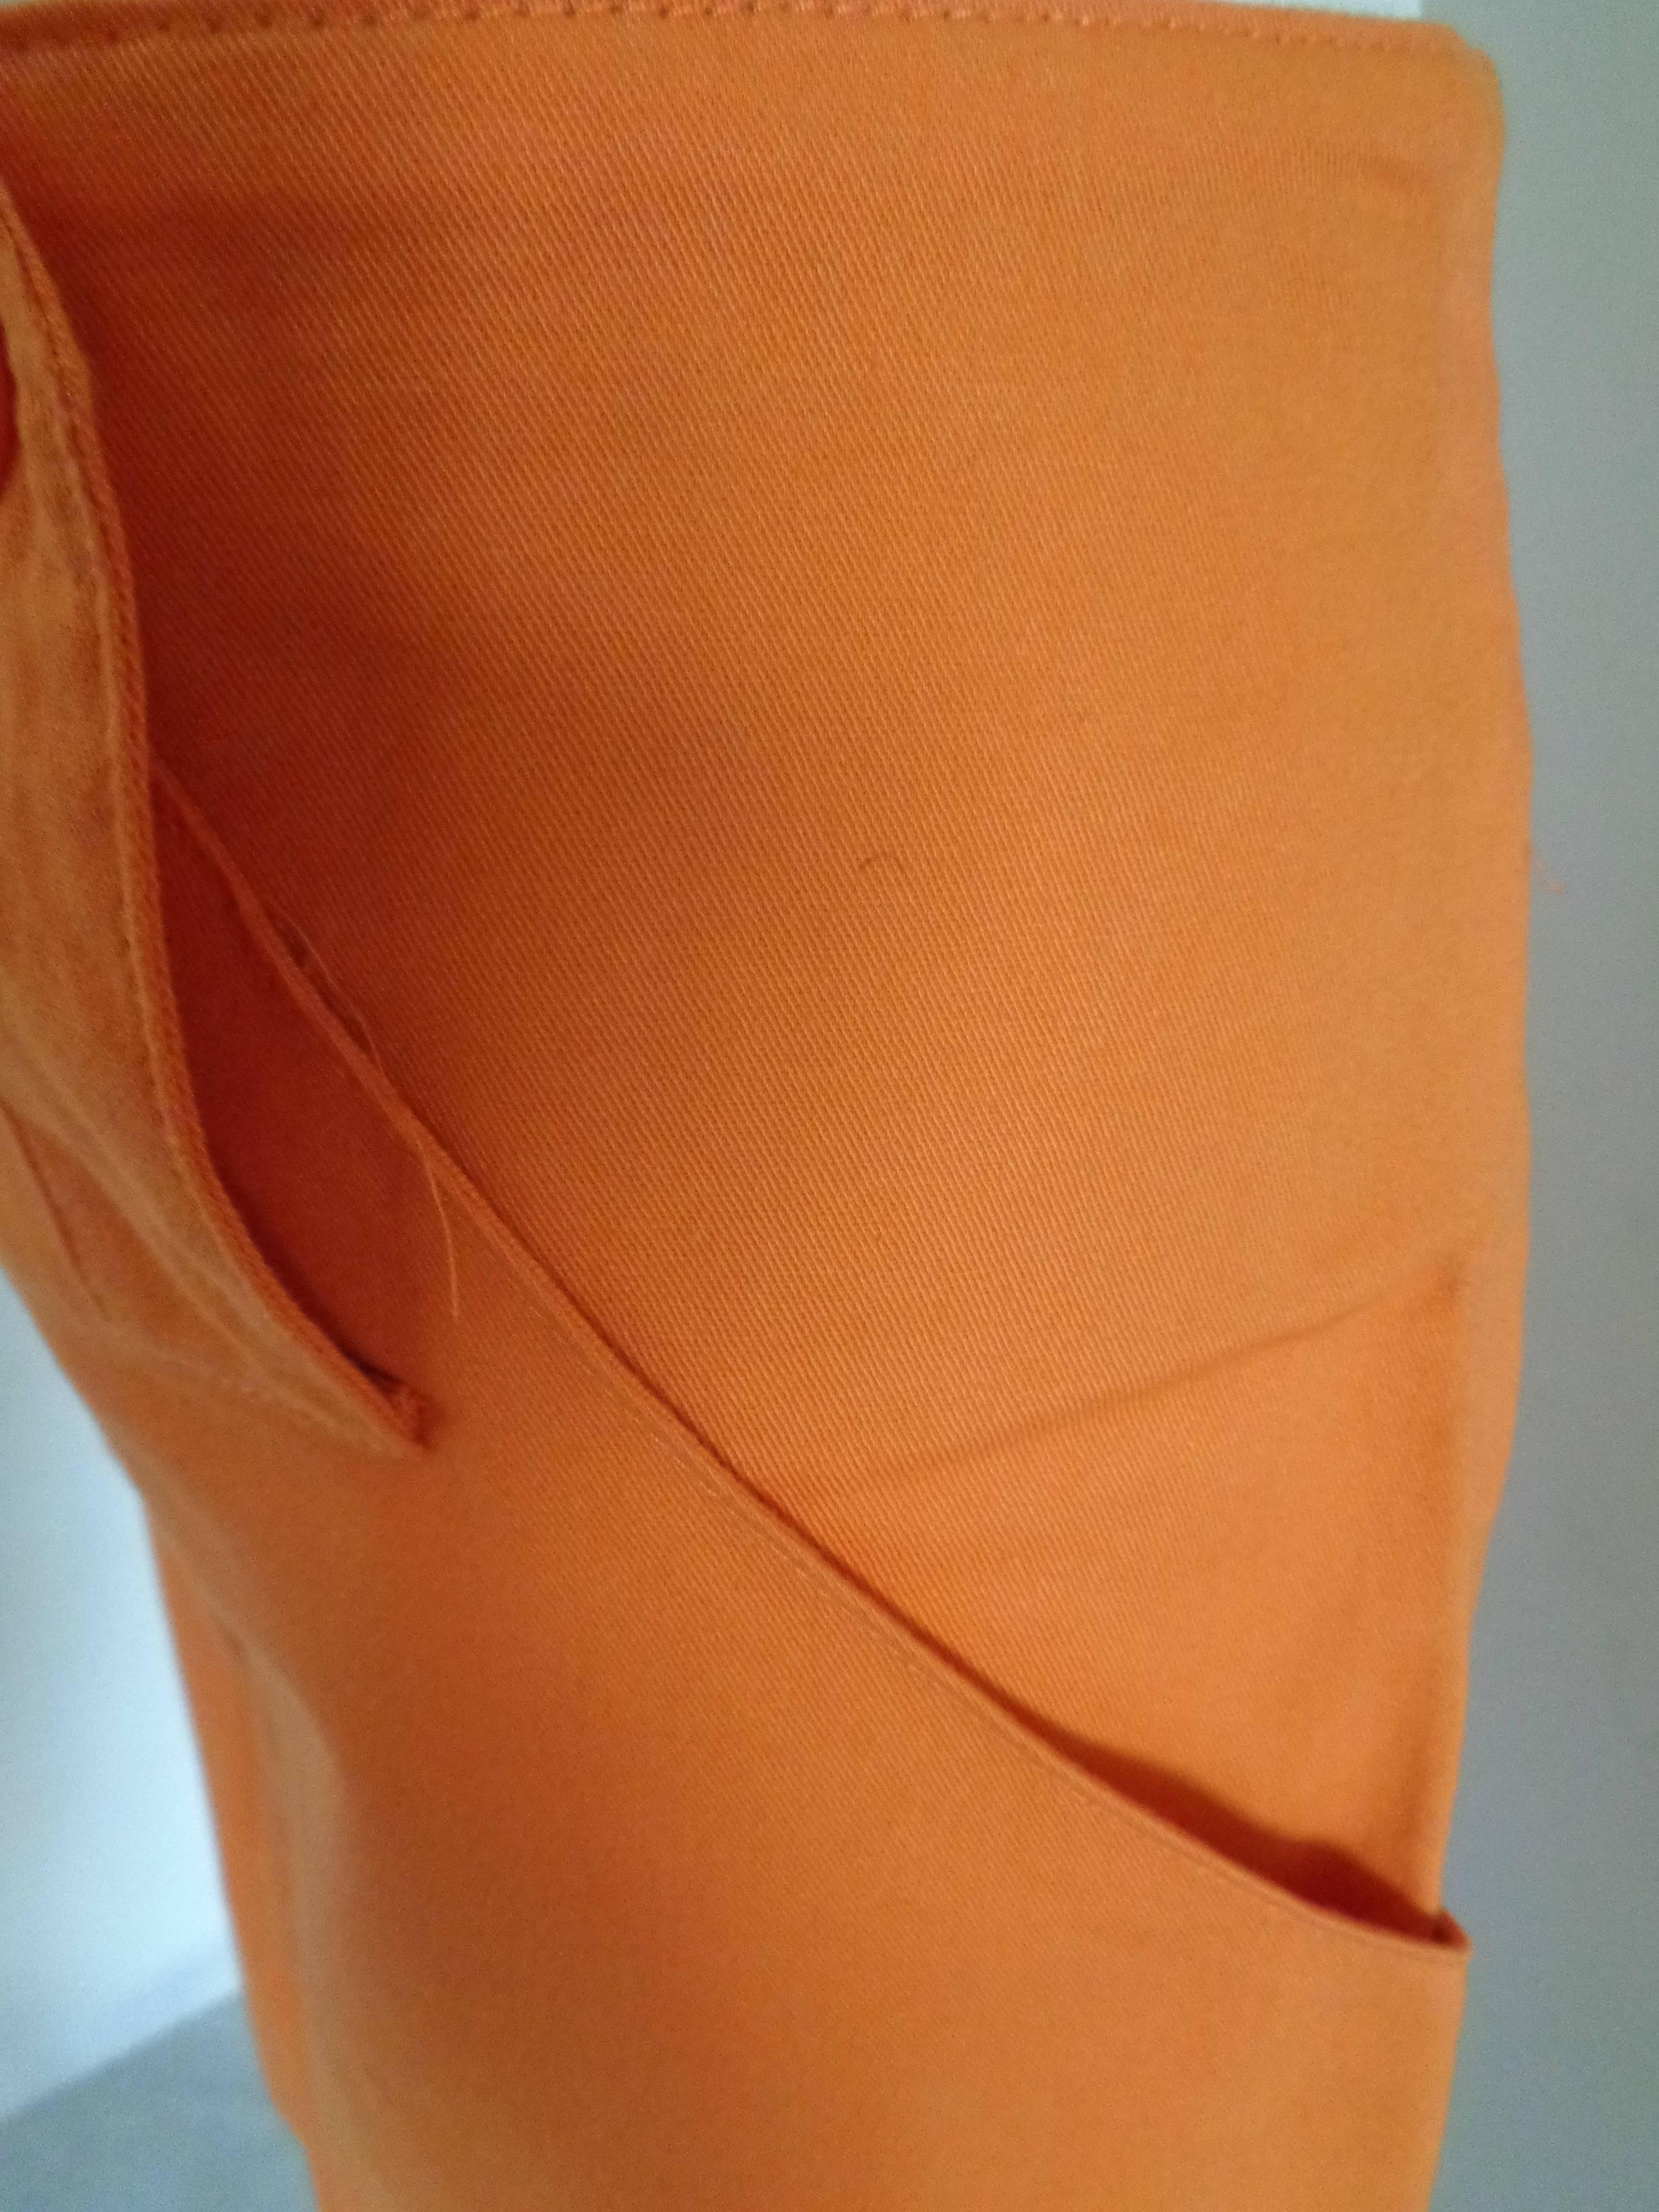 Nazareno Gabrieli Orange Skirt NWOT

totally made in italy in italian size range 40

Composition: Cotton